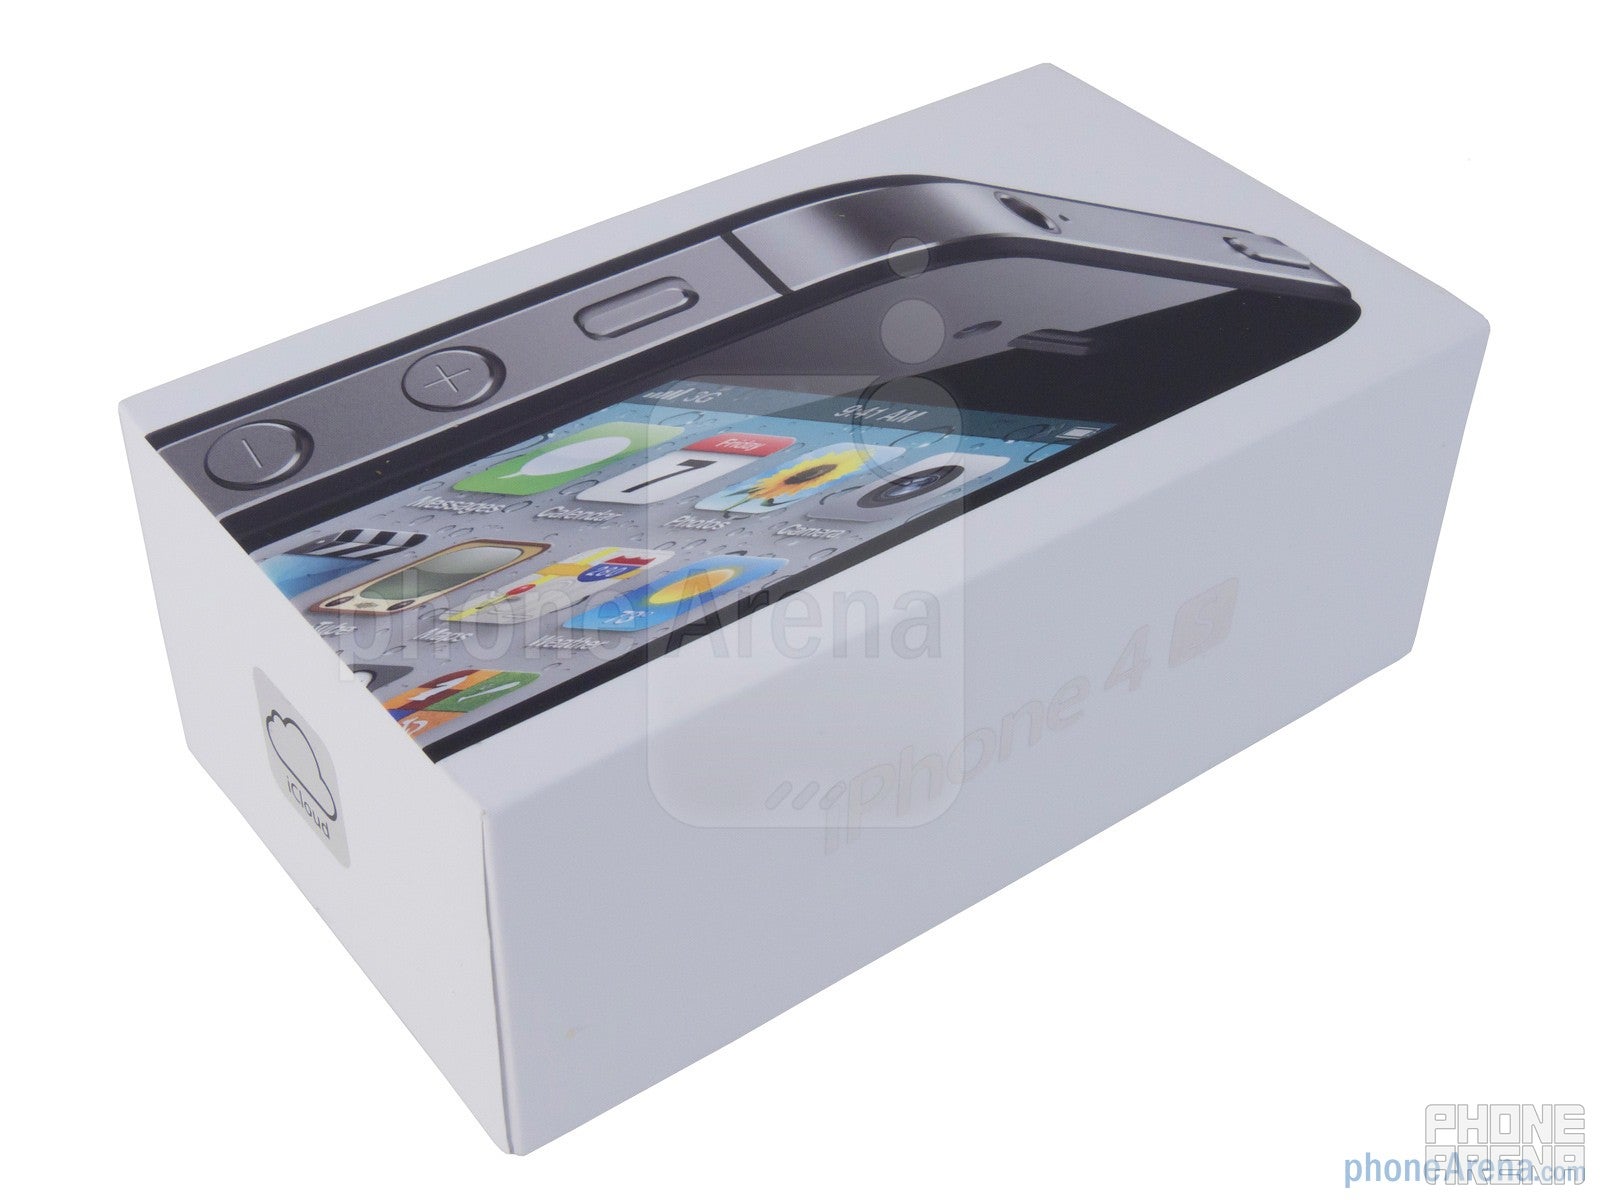 Apple iPhone 4 specs - PhoneArena